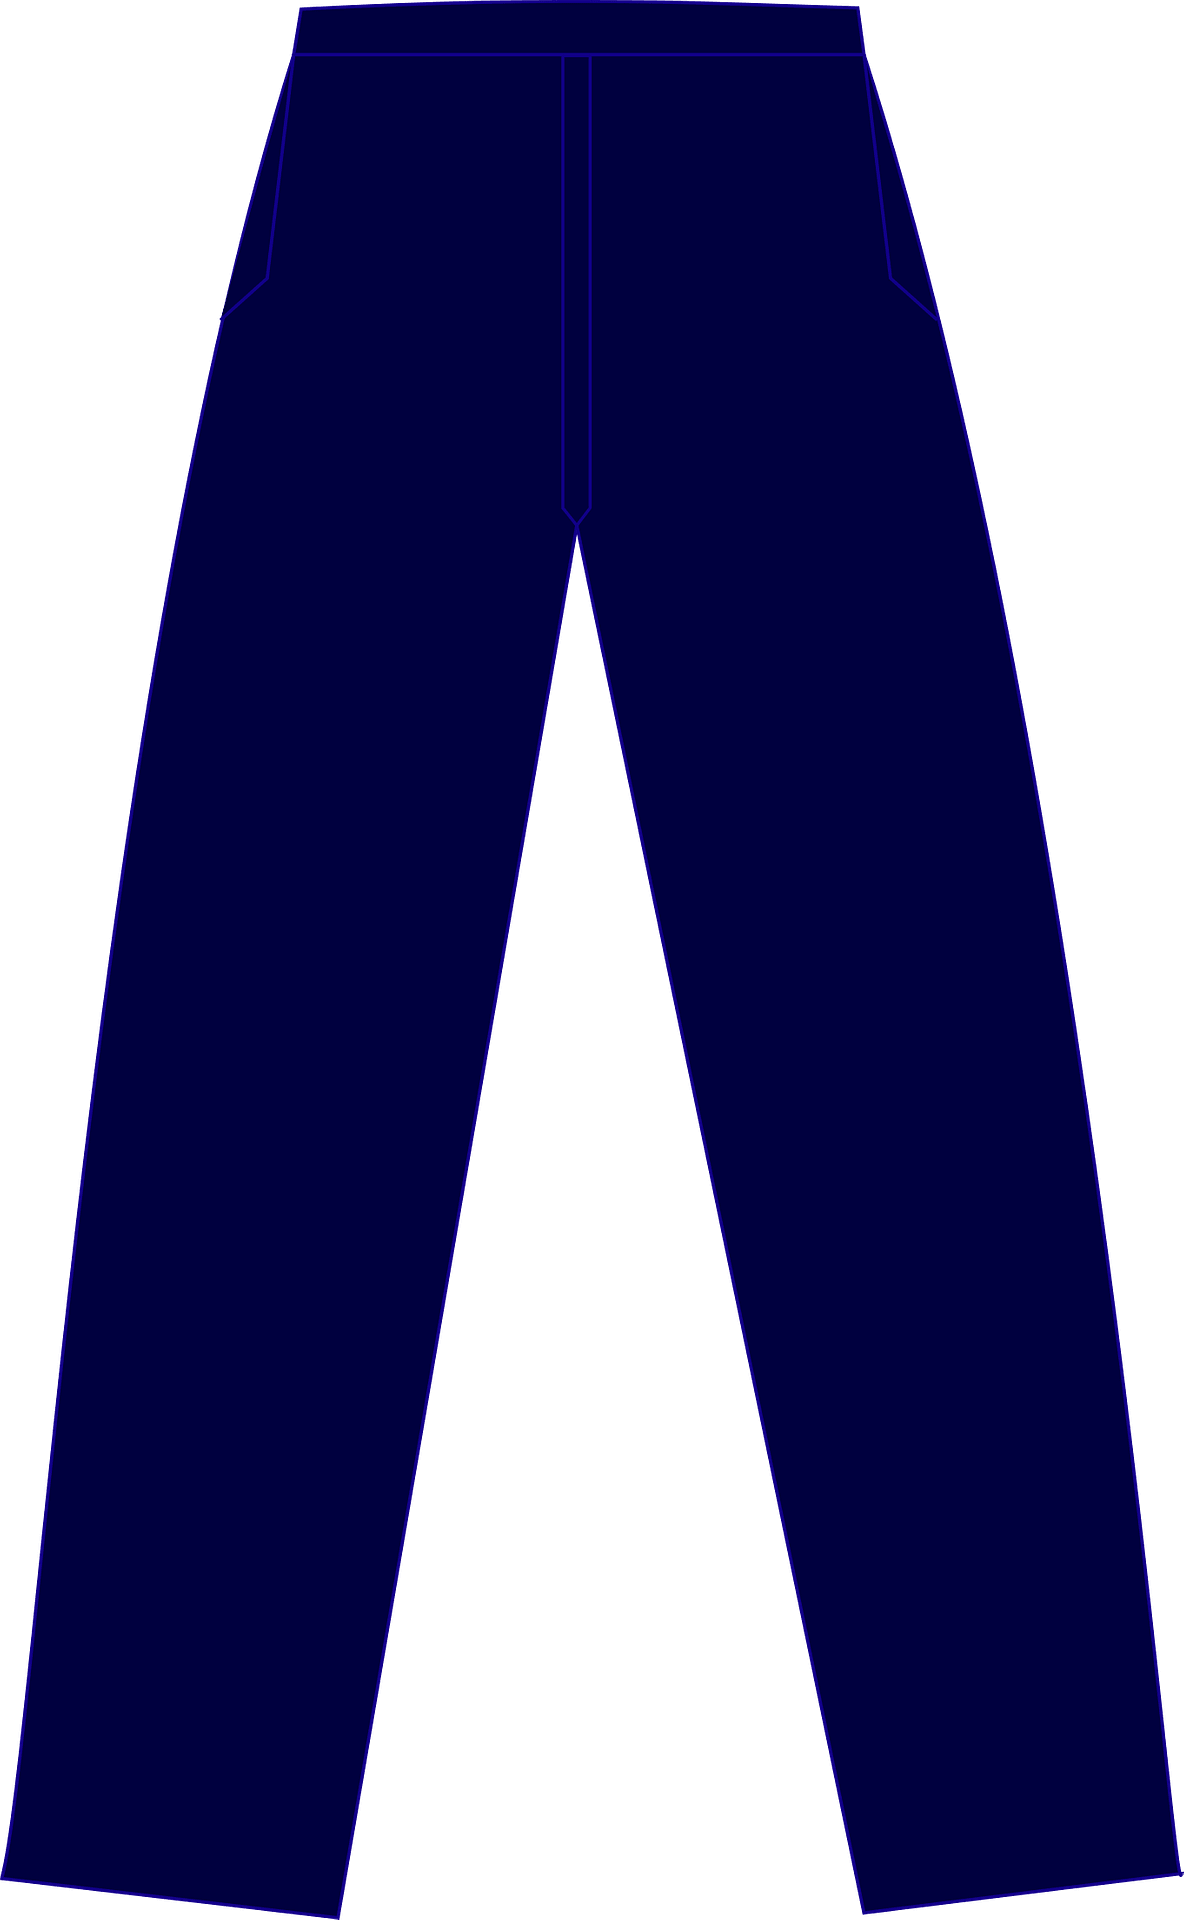 Jeans Trousers Clipart Pants Clipart - Clip Art Library